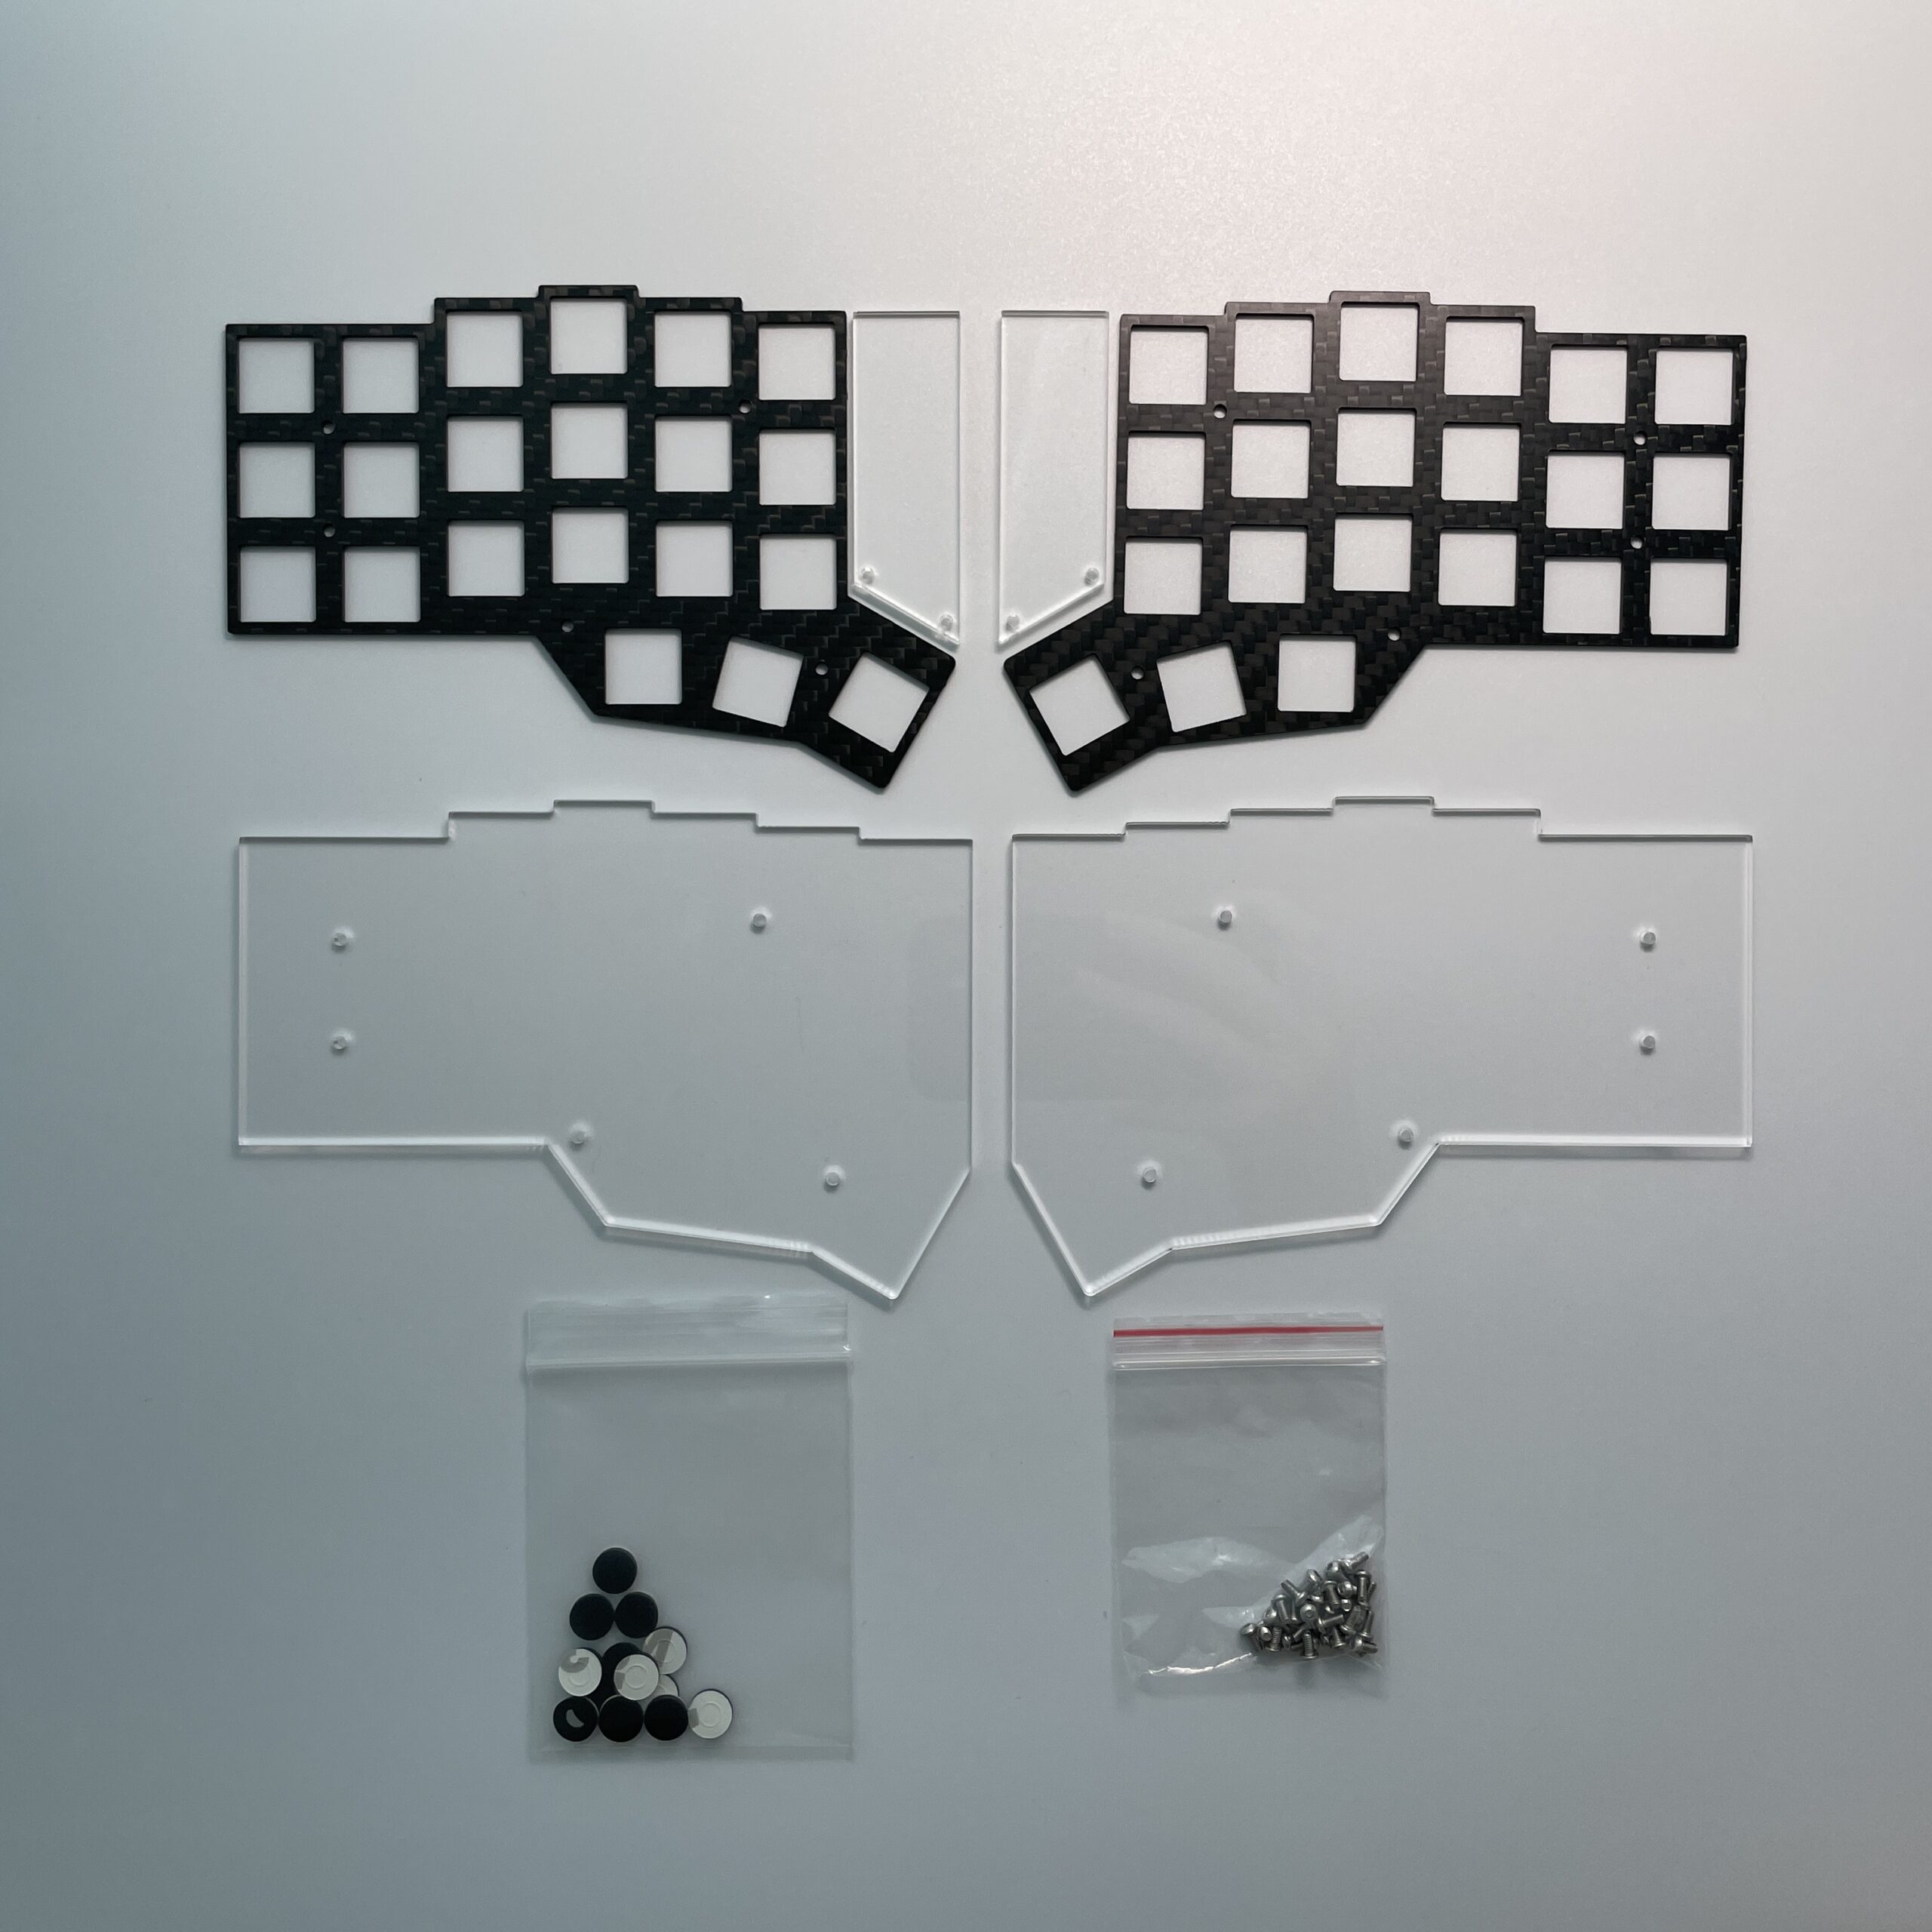 Carbon Fiber Top & Acrylic Bottom Case Kit for Corne Keyboard (crkbd) MX or Choc